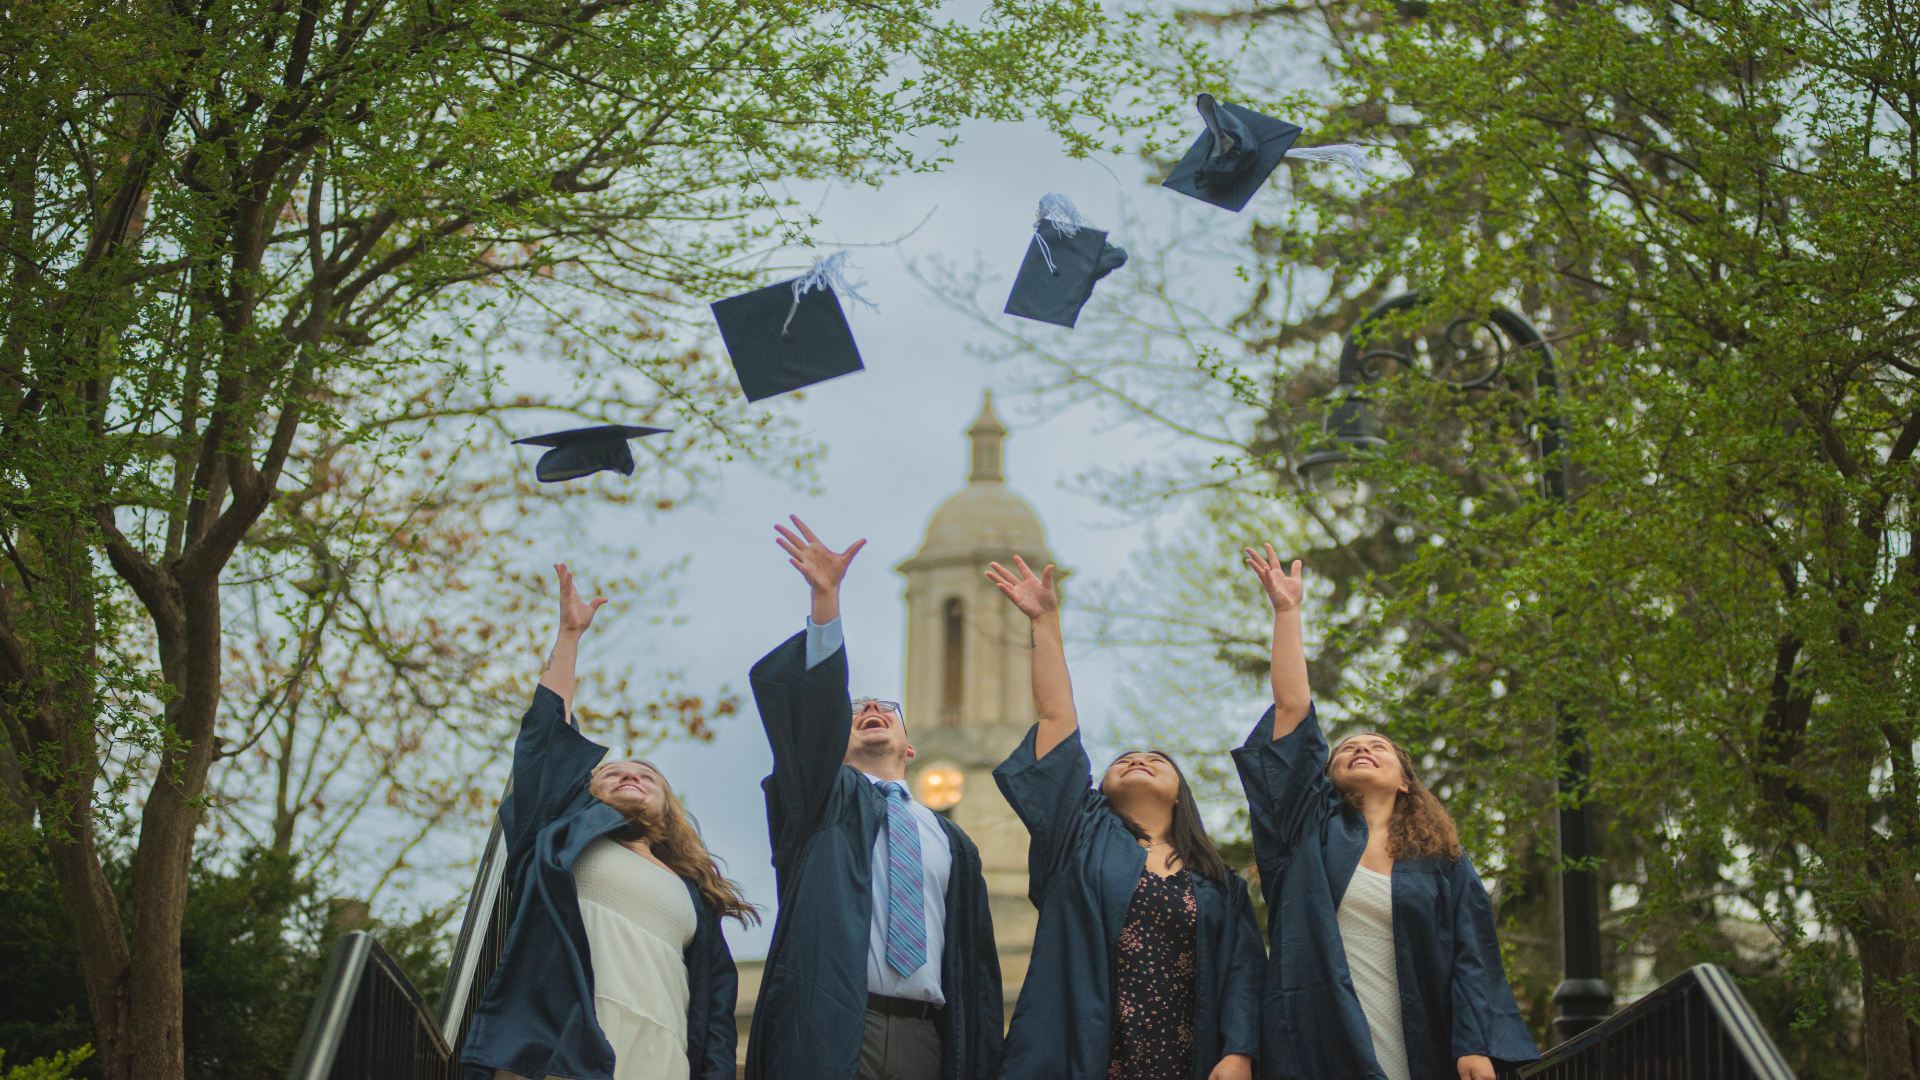 College graduates tossing graduation caps into the air